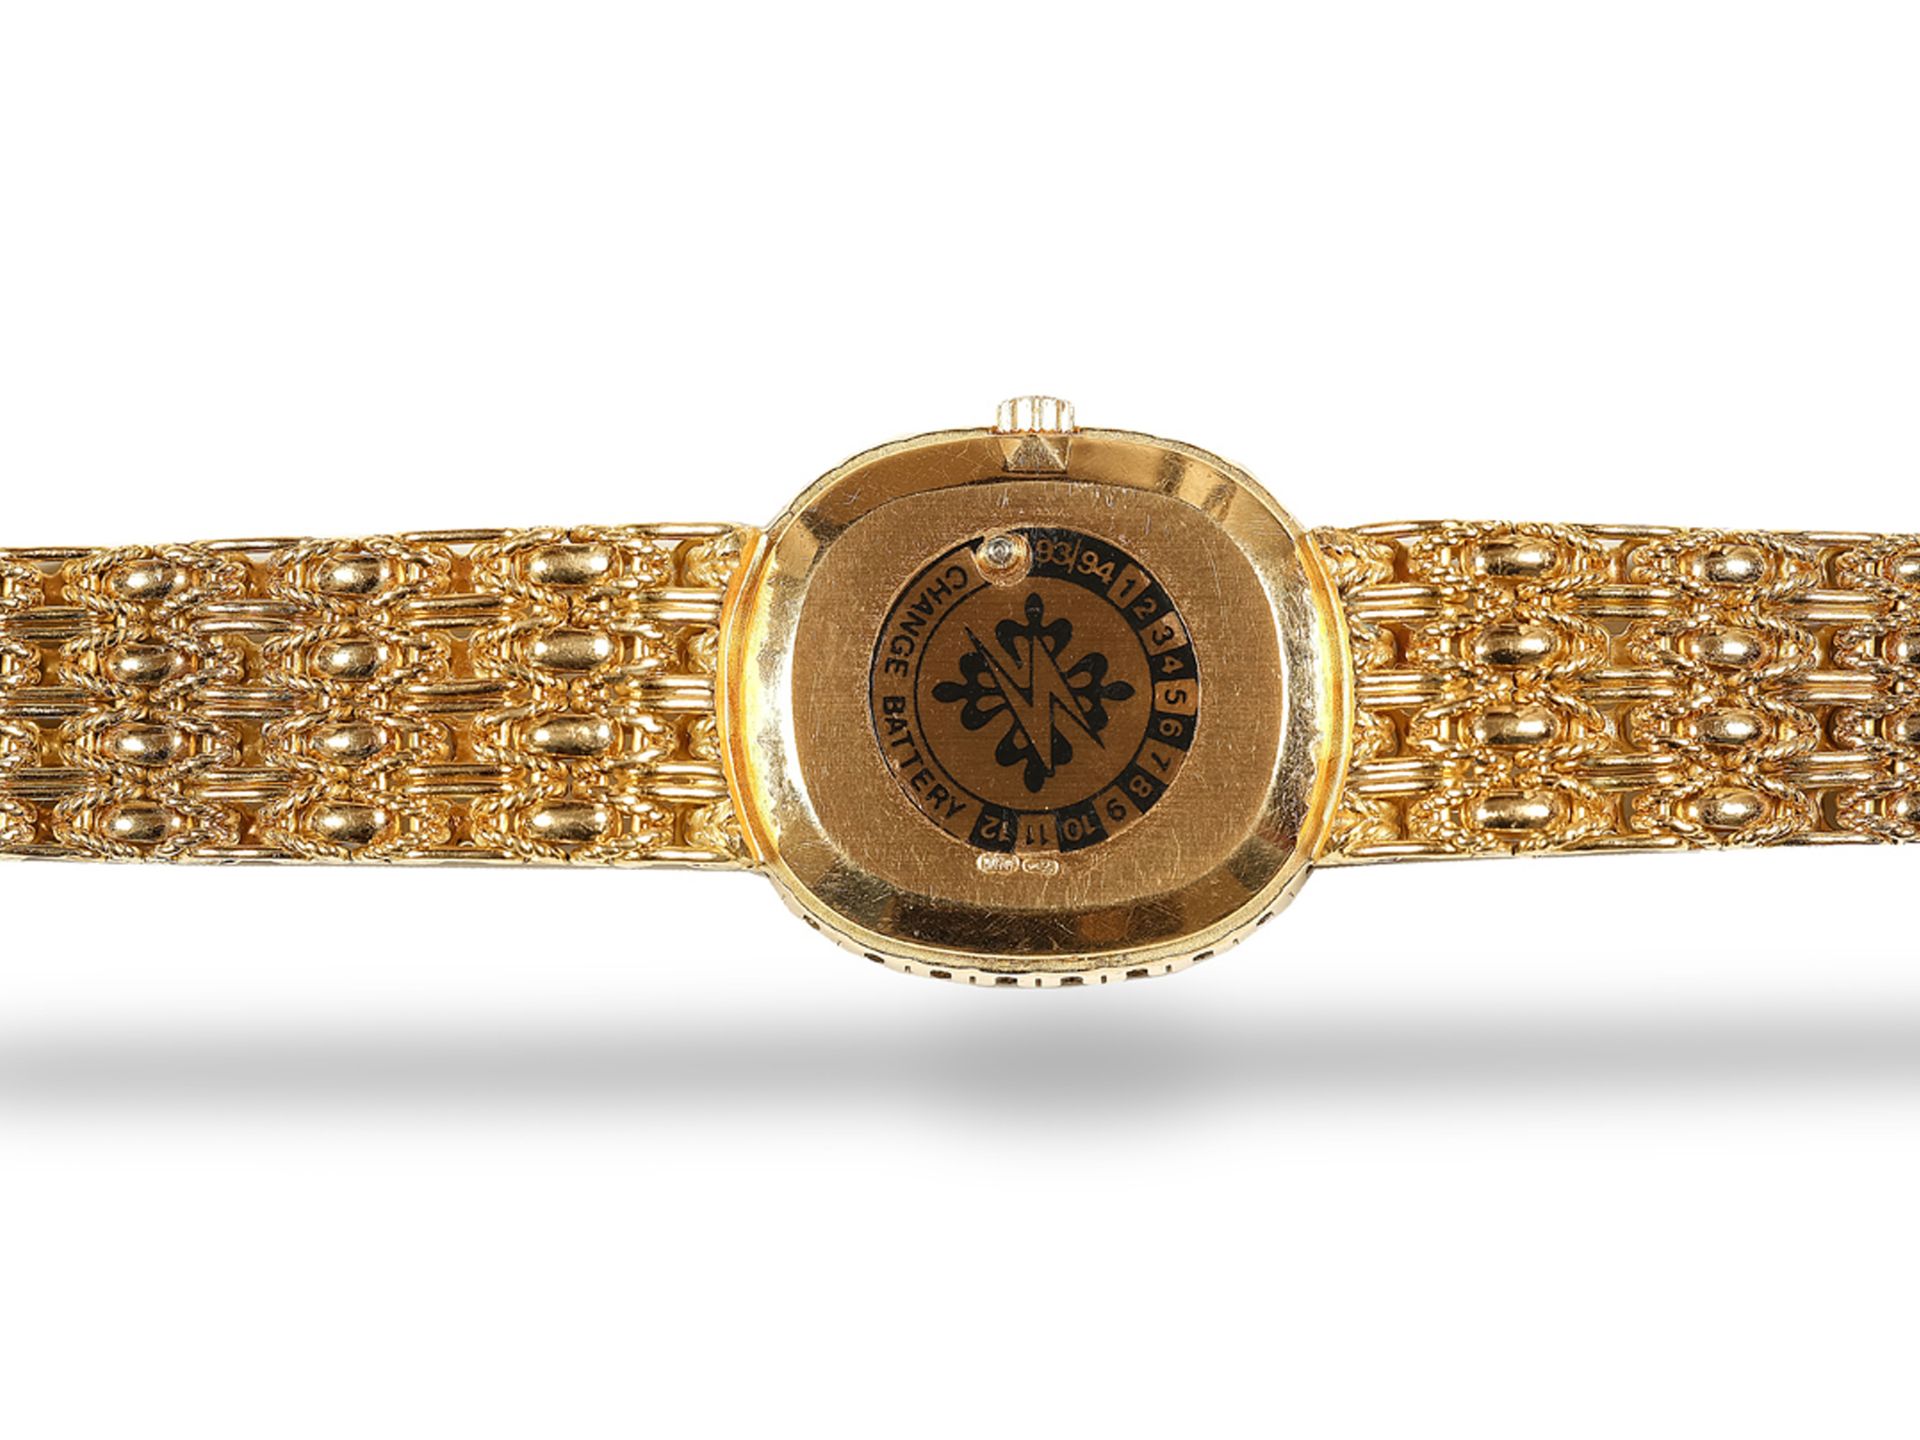 Patek Philippe, Geneve, Ladies watch, Yellow gold, 18 carat - Image 5 of 7